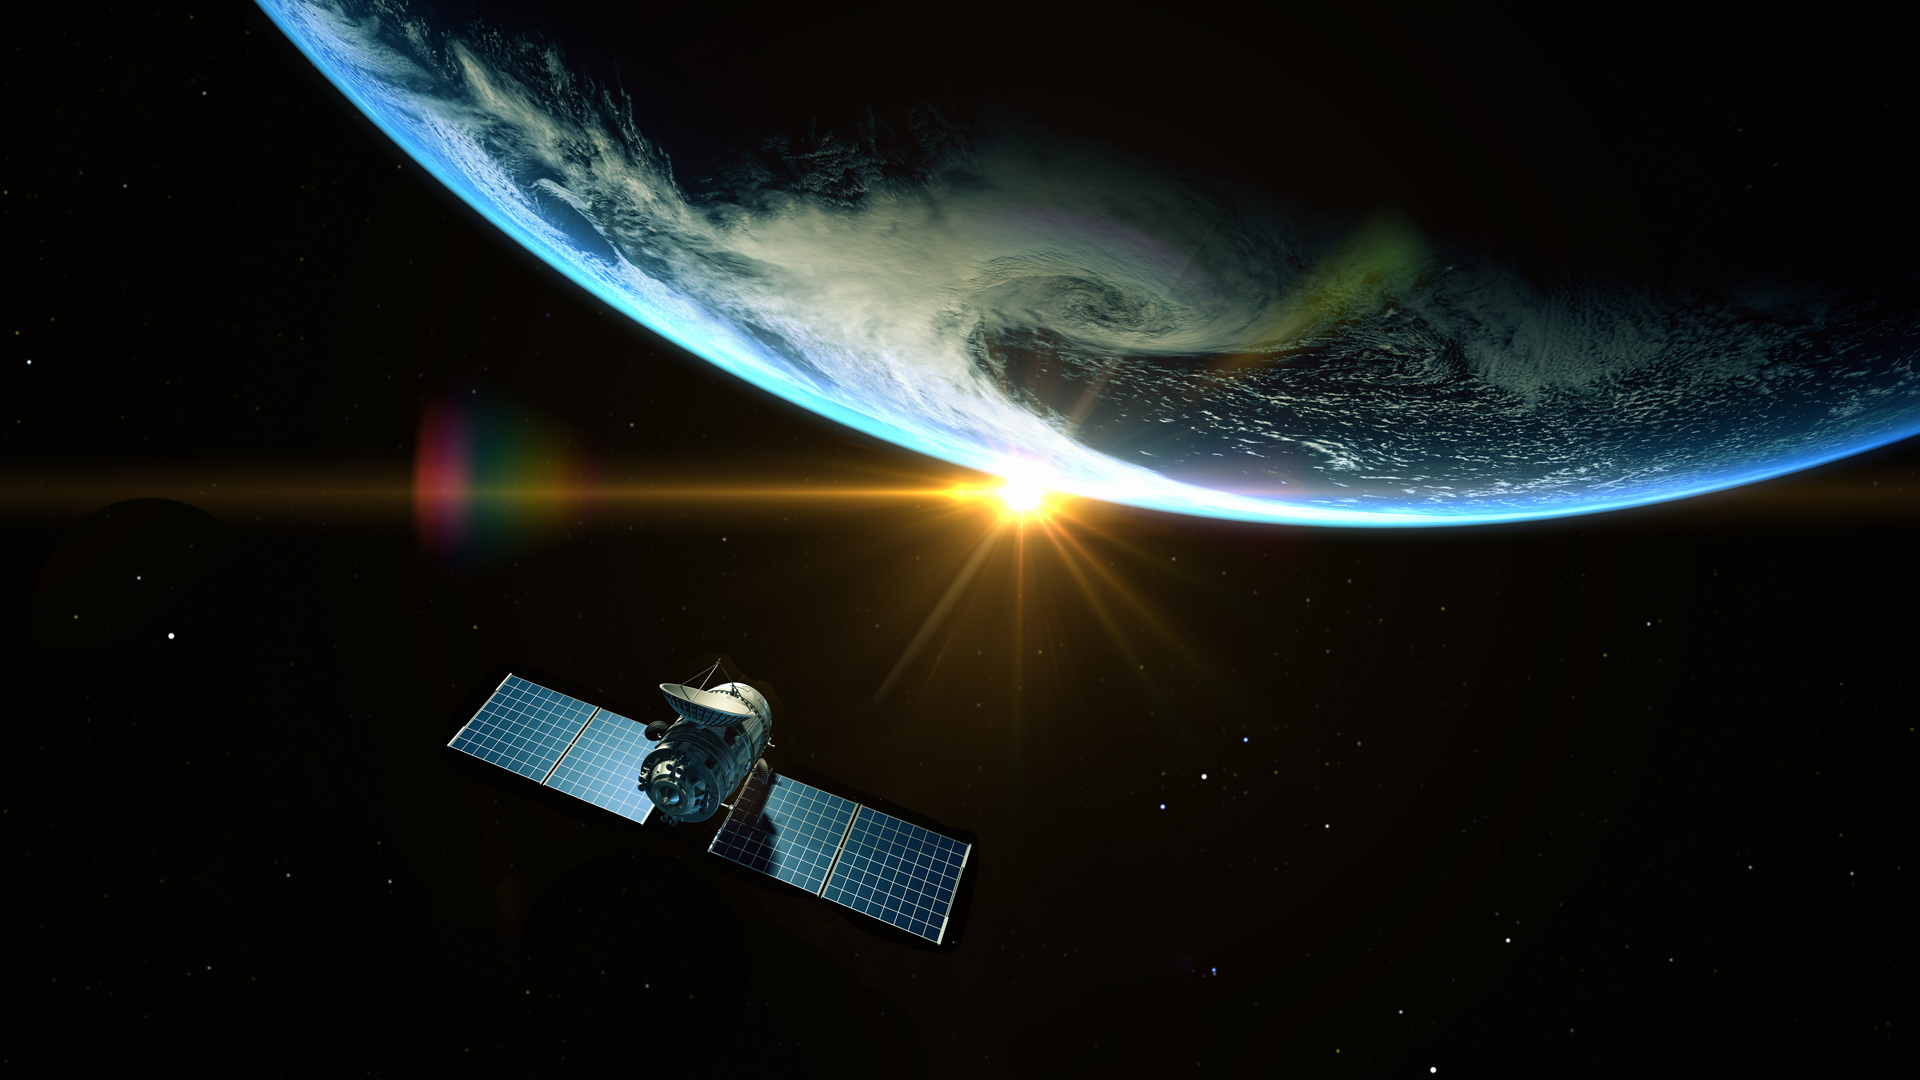 Using award winning technology to innovate small satellites